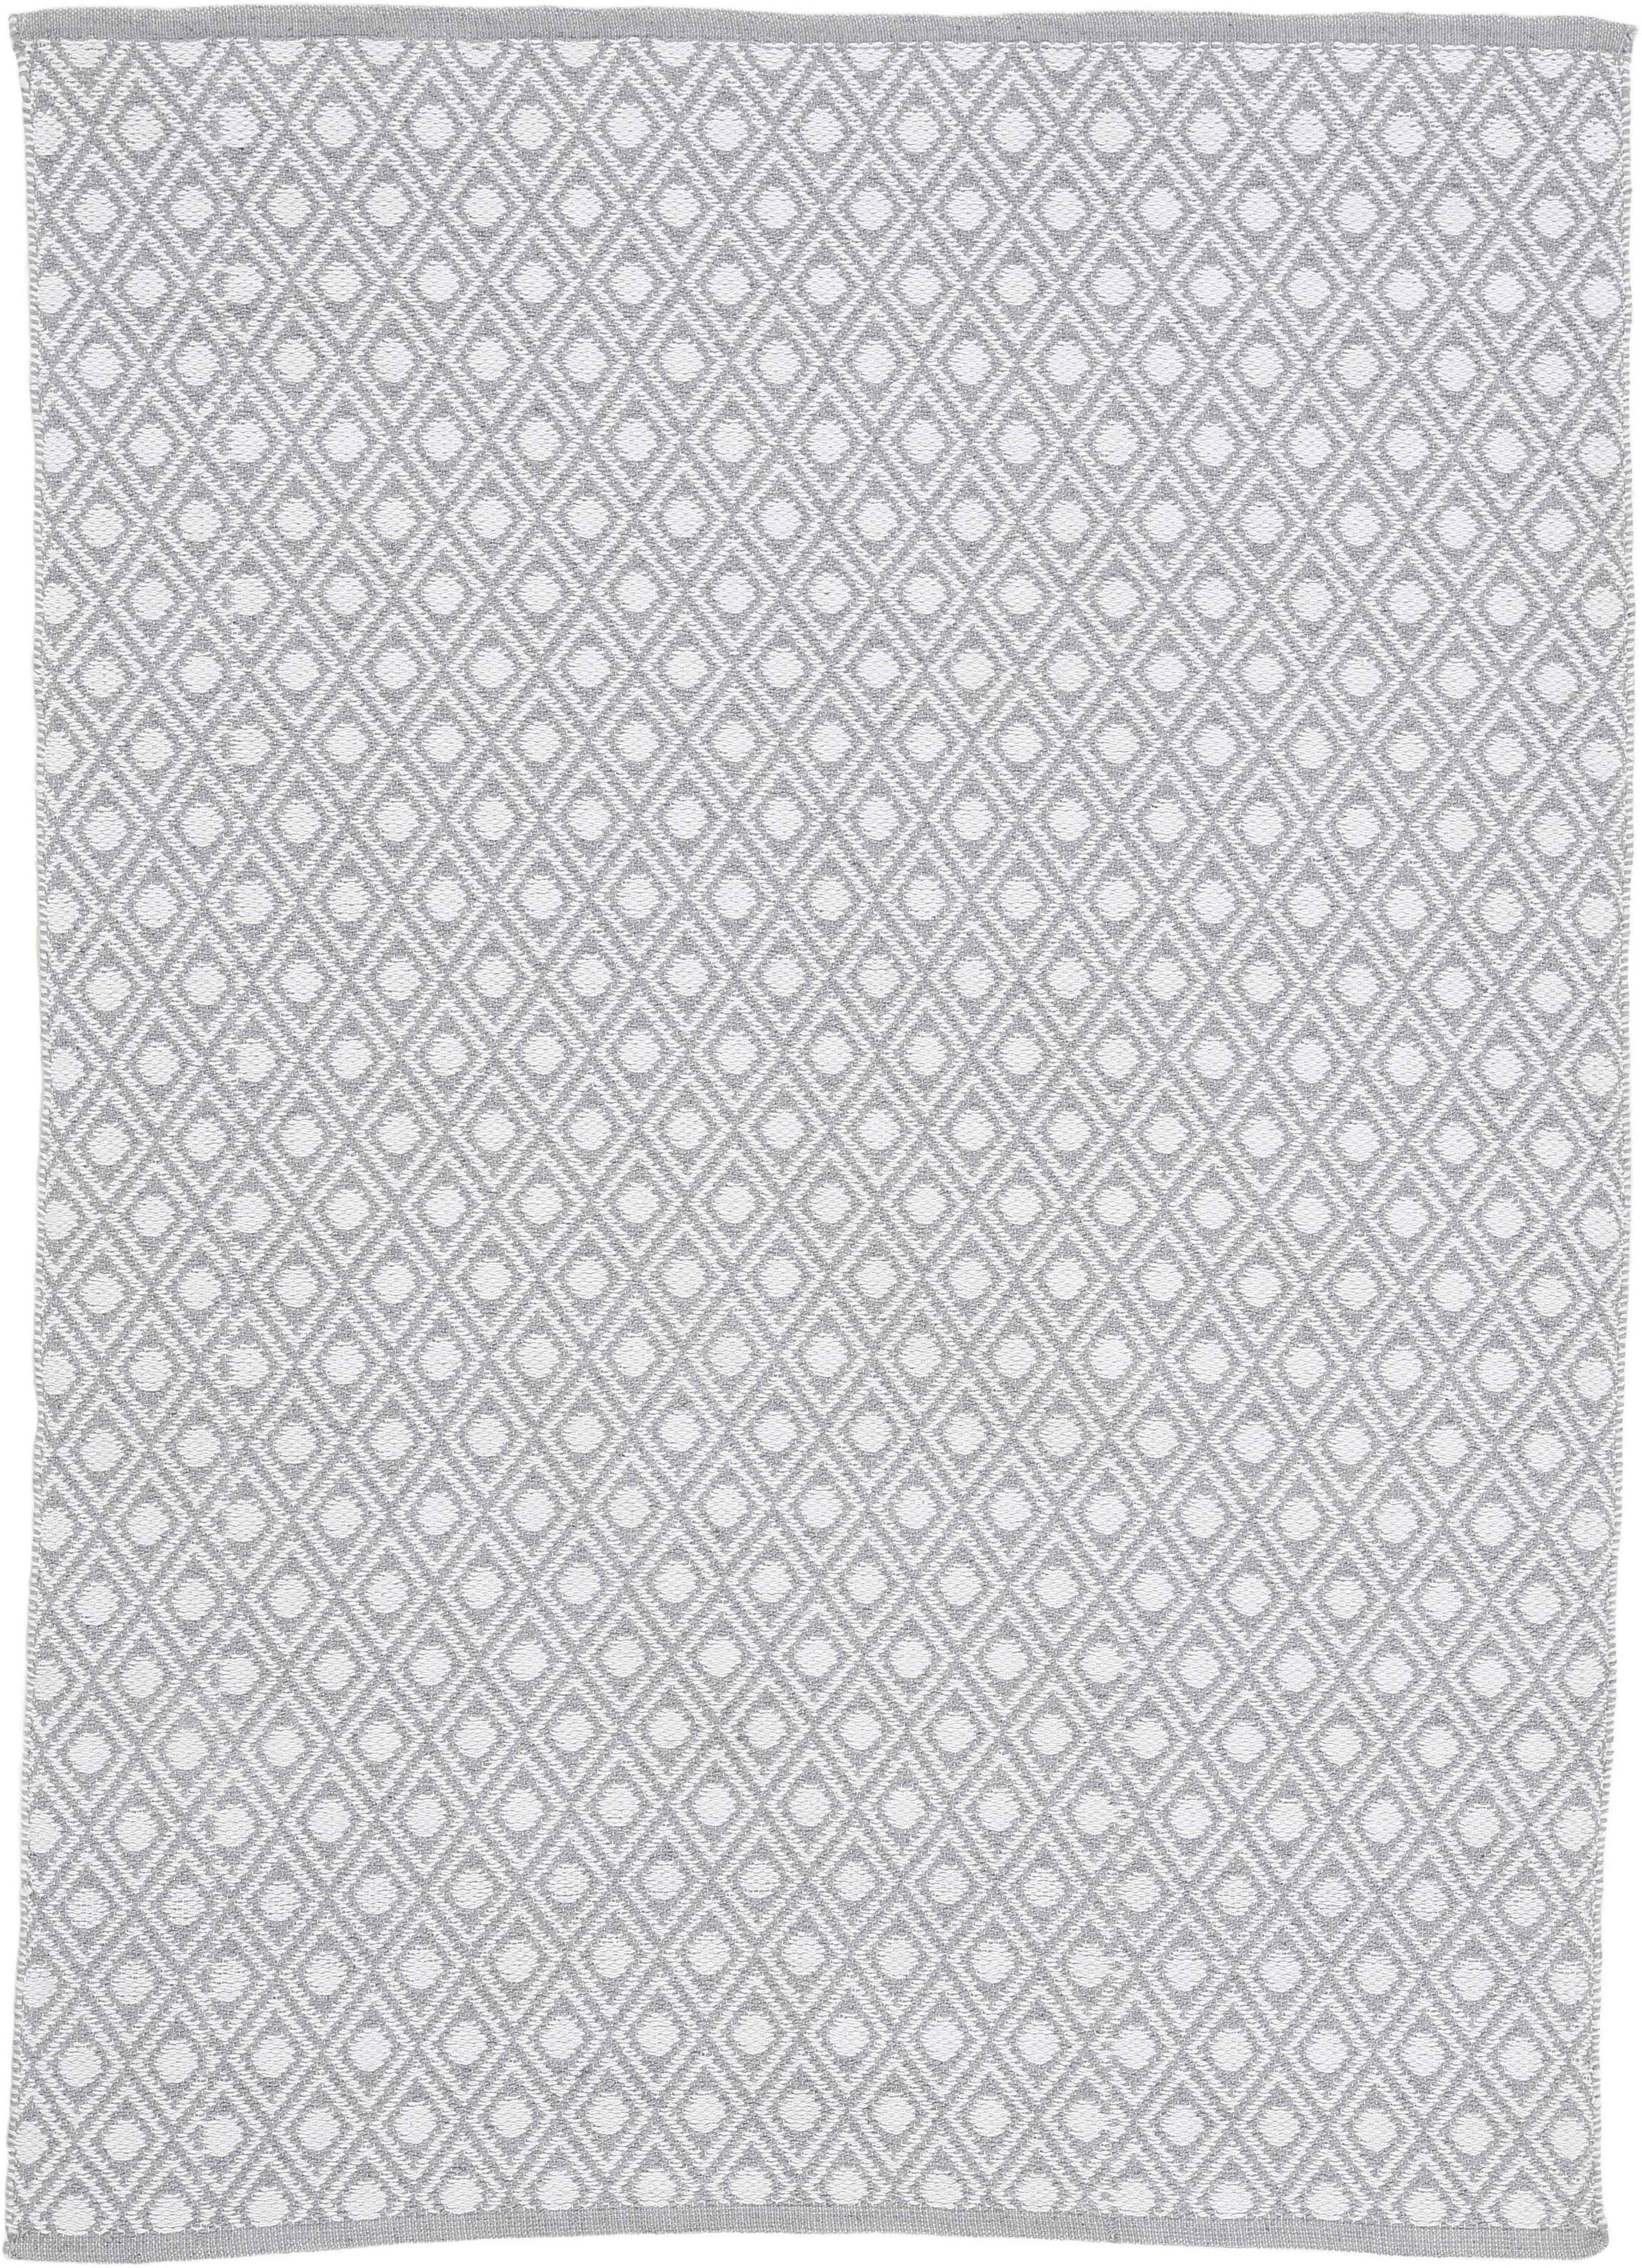 Teppich Frida 201, carpetfine, rechteckig, Höhe: 7 mm, Wendeteppich, 100% recyceltem Material (PET), Flachgewebe, Sisal Optik | Kurzflor-Teppiche